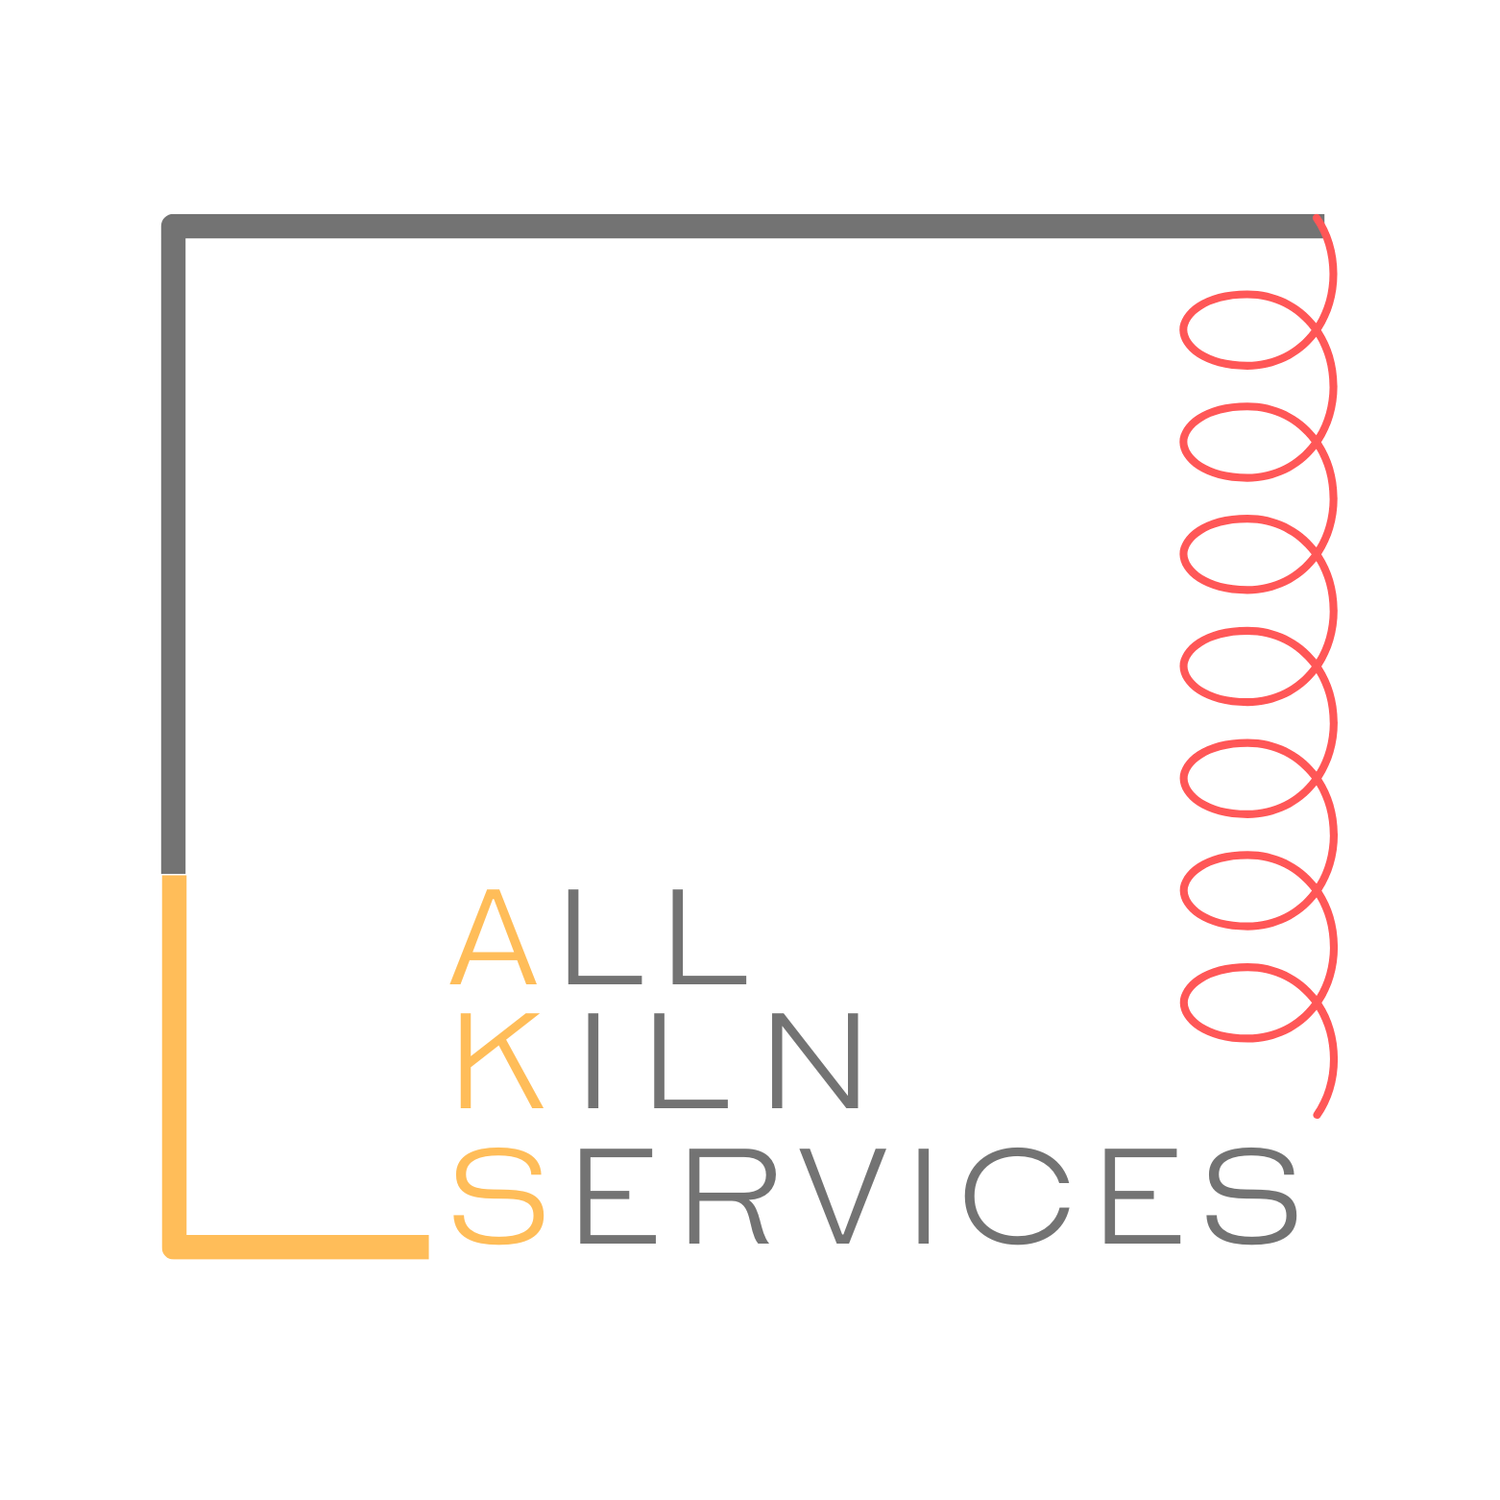 All Kiln Services